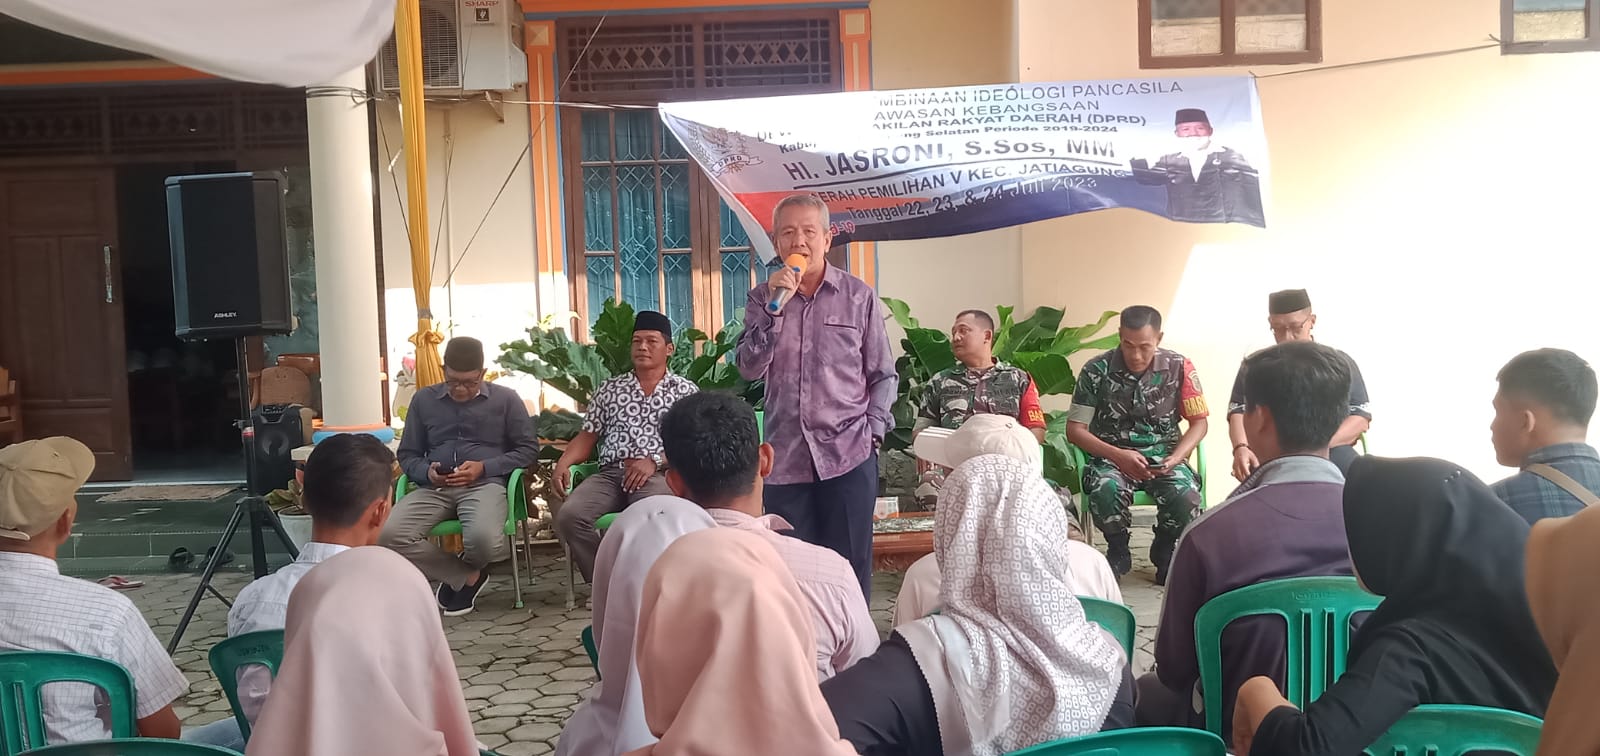 Anggota DPRD Lampung Selatan Jasroni Sosialisasikan IPWK di Desa Jatimulyo 